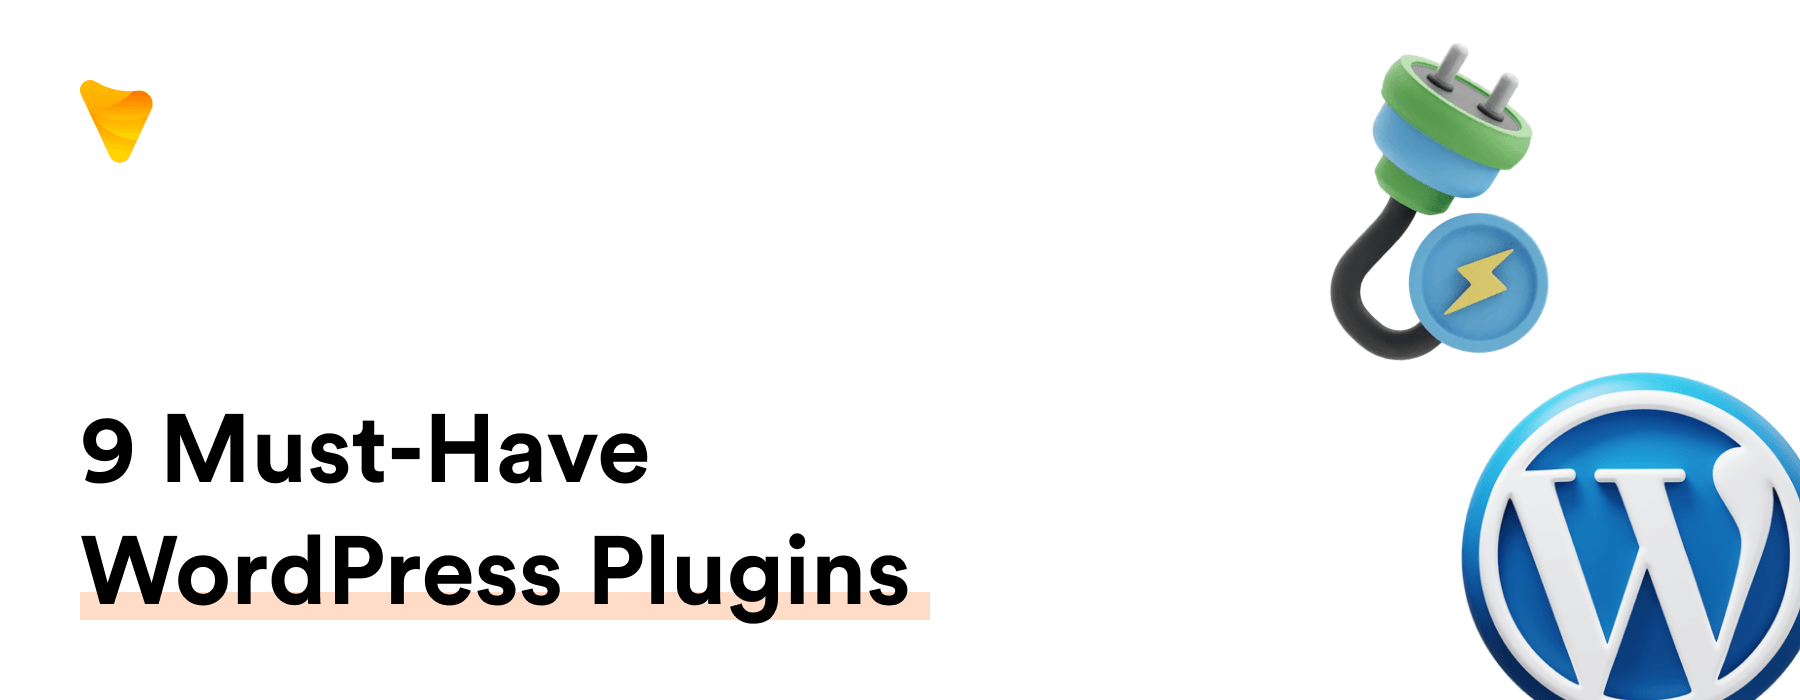 must-have-wordpress-plugins